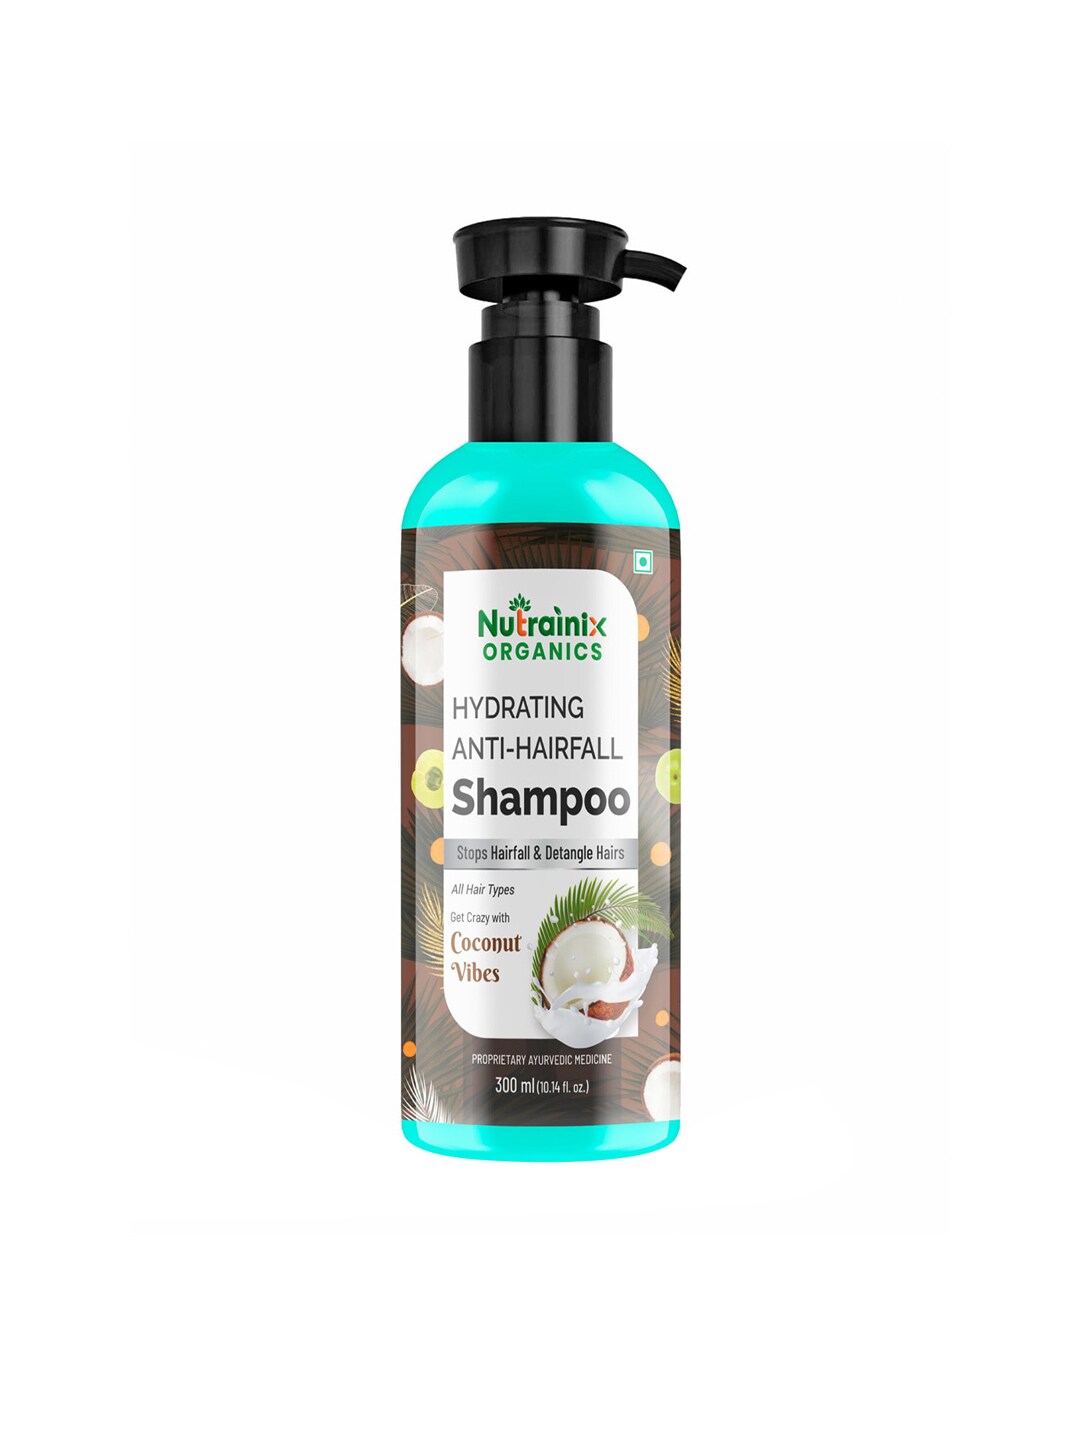 Nutrainix Organics Hydrating Anti-Hairfall Shampoo 300 ml Price in India